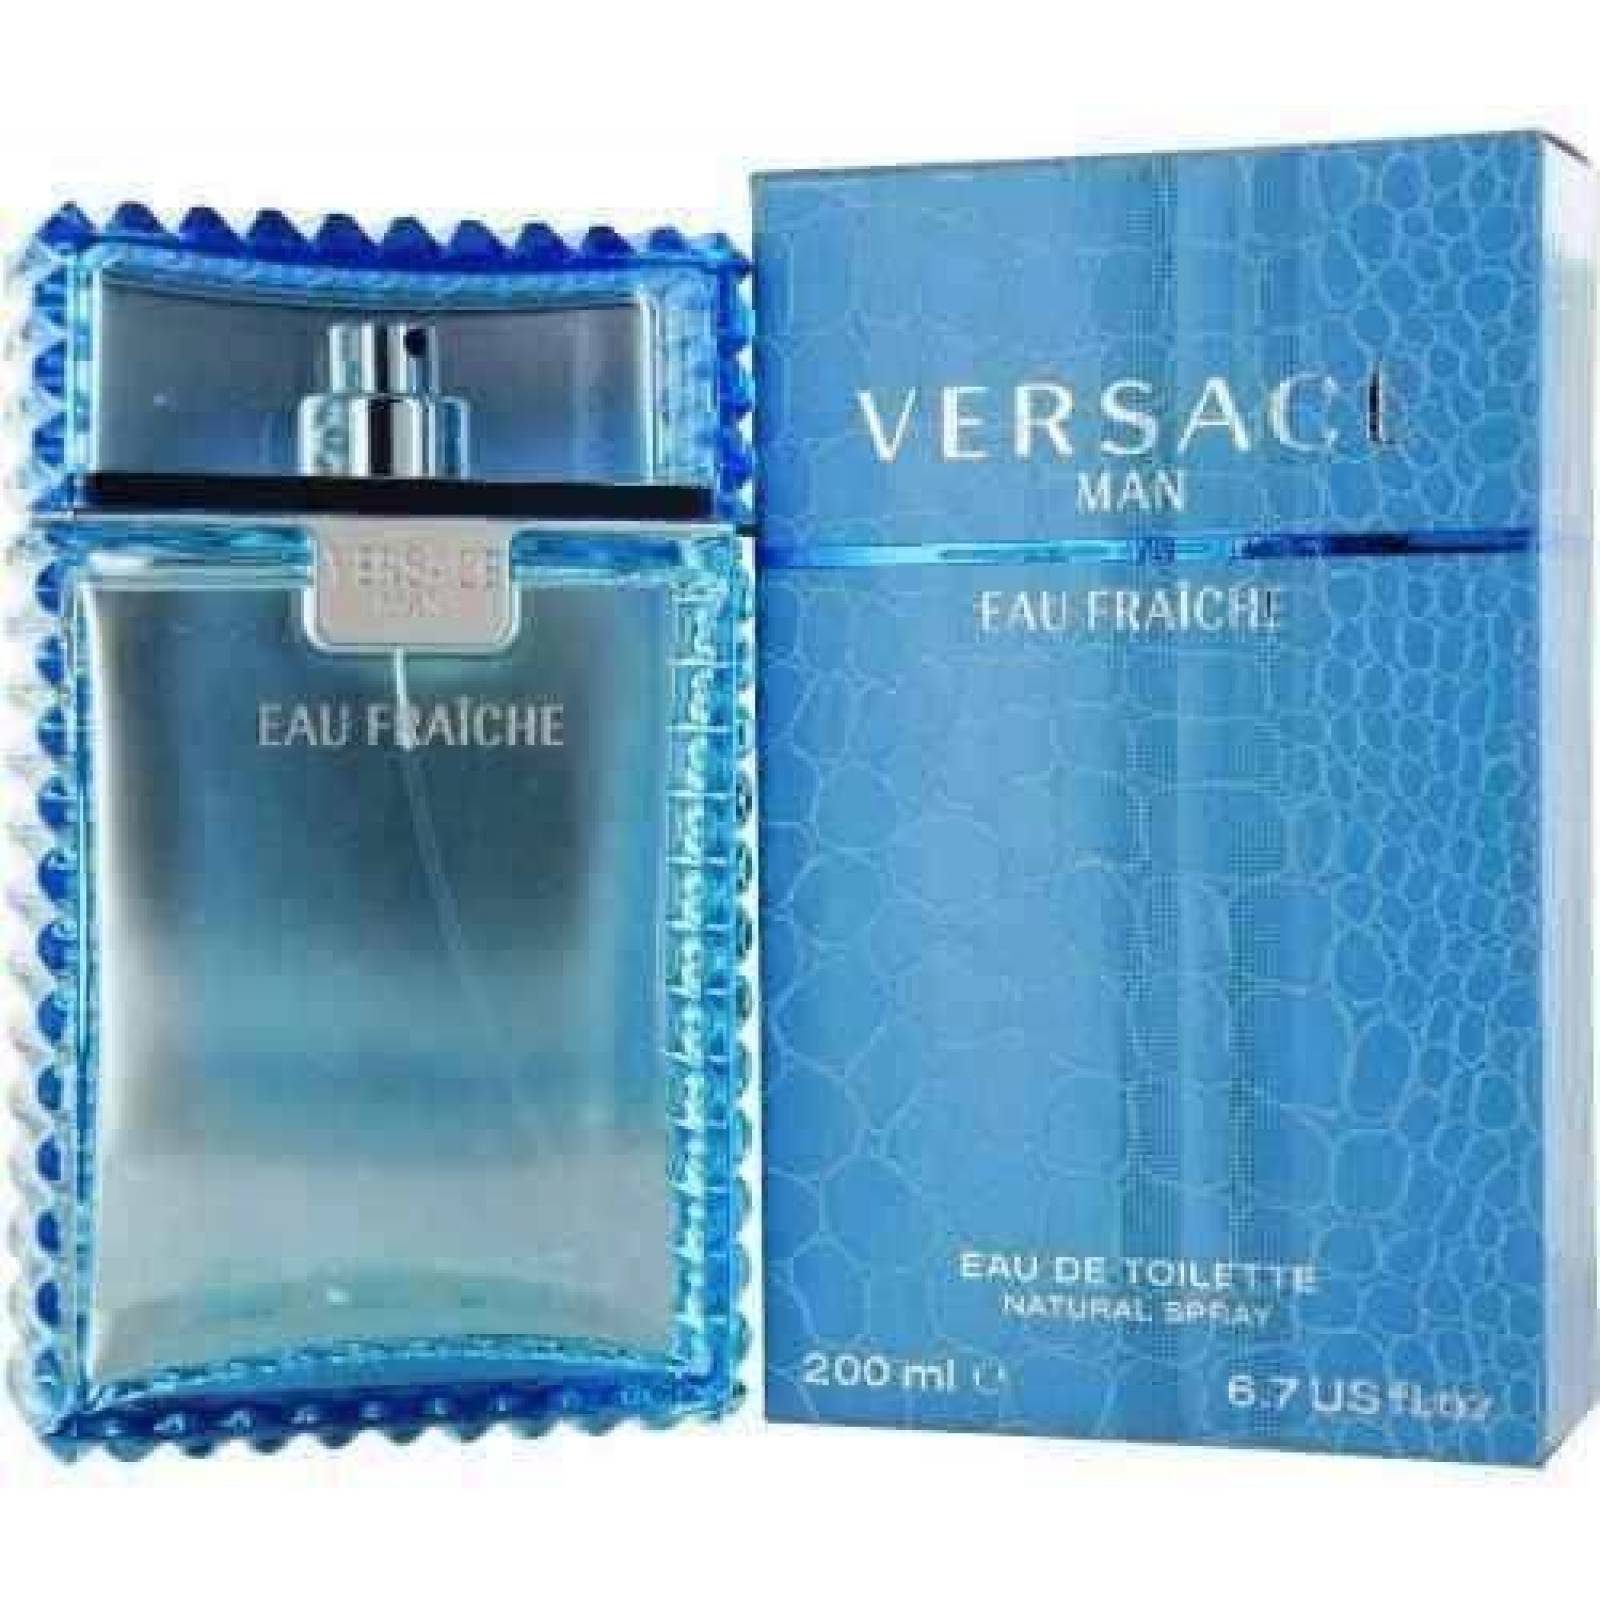 Versace Man Eau Fraiche Caballero 200 Ml Edt Spray